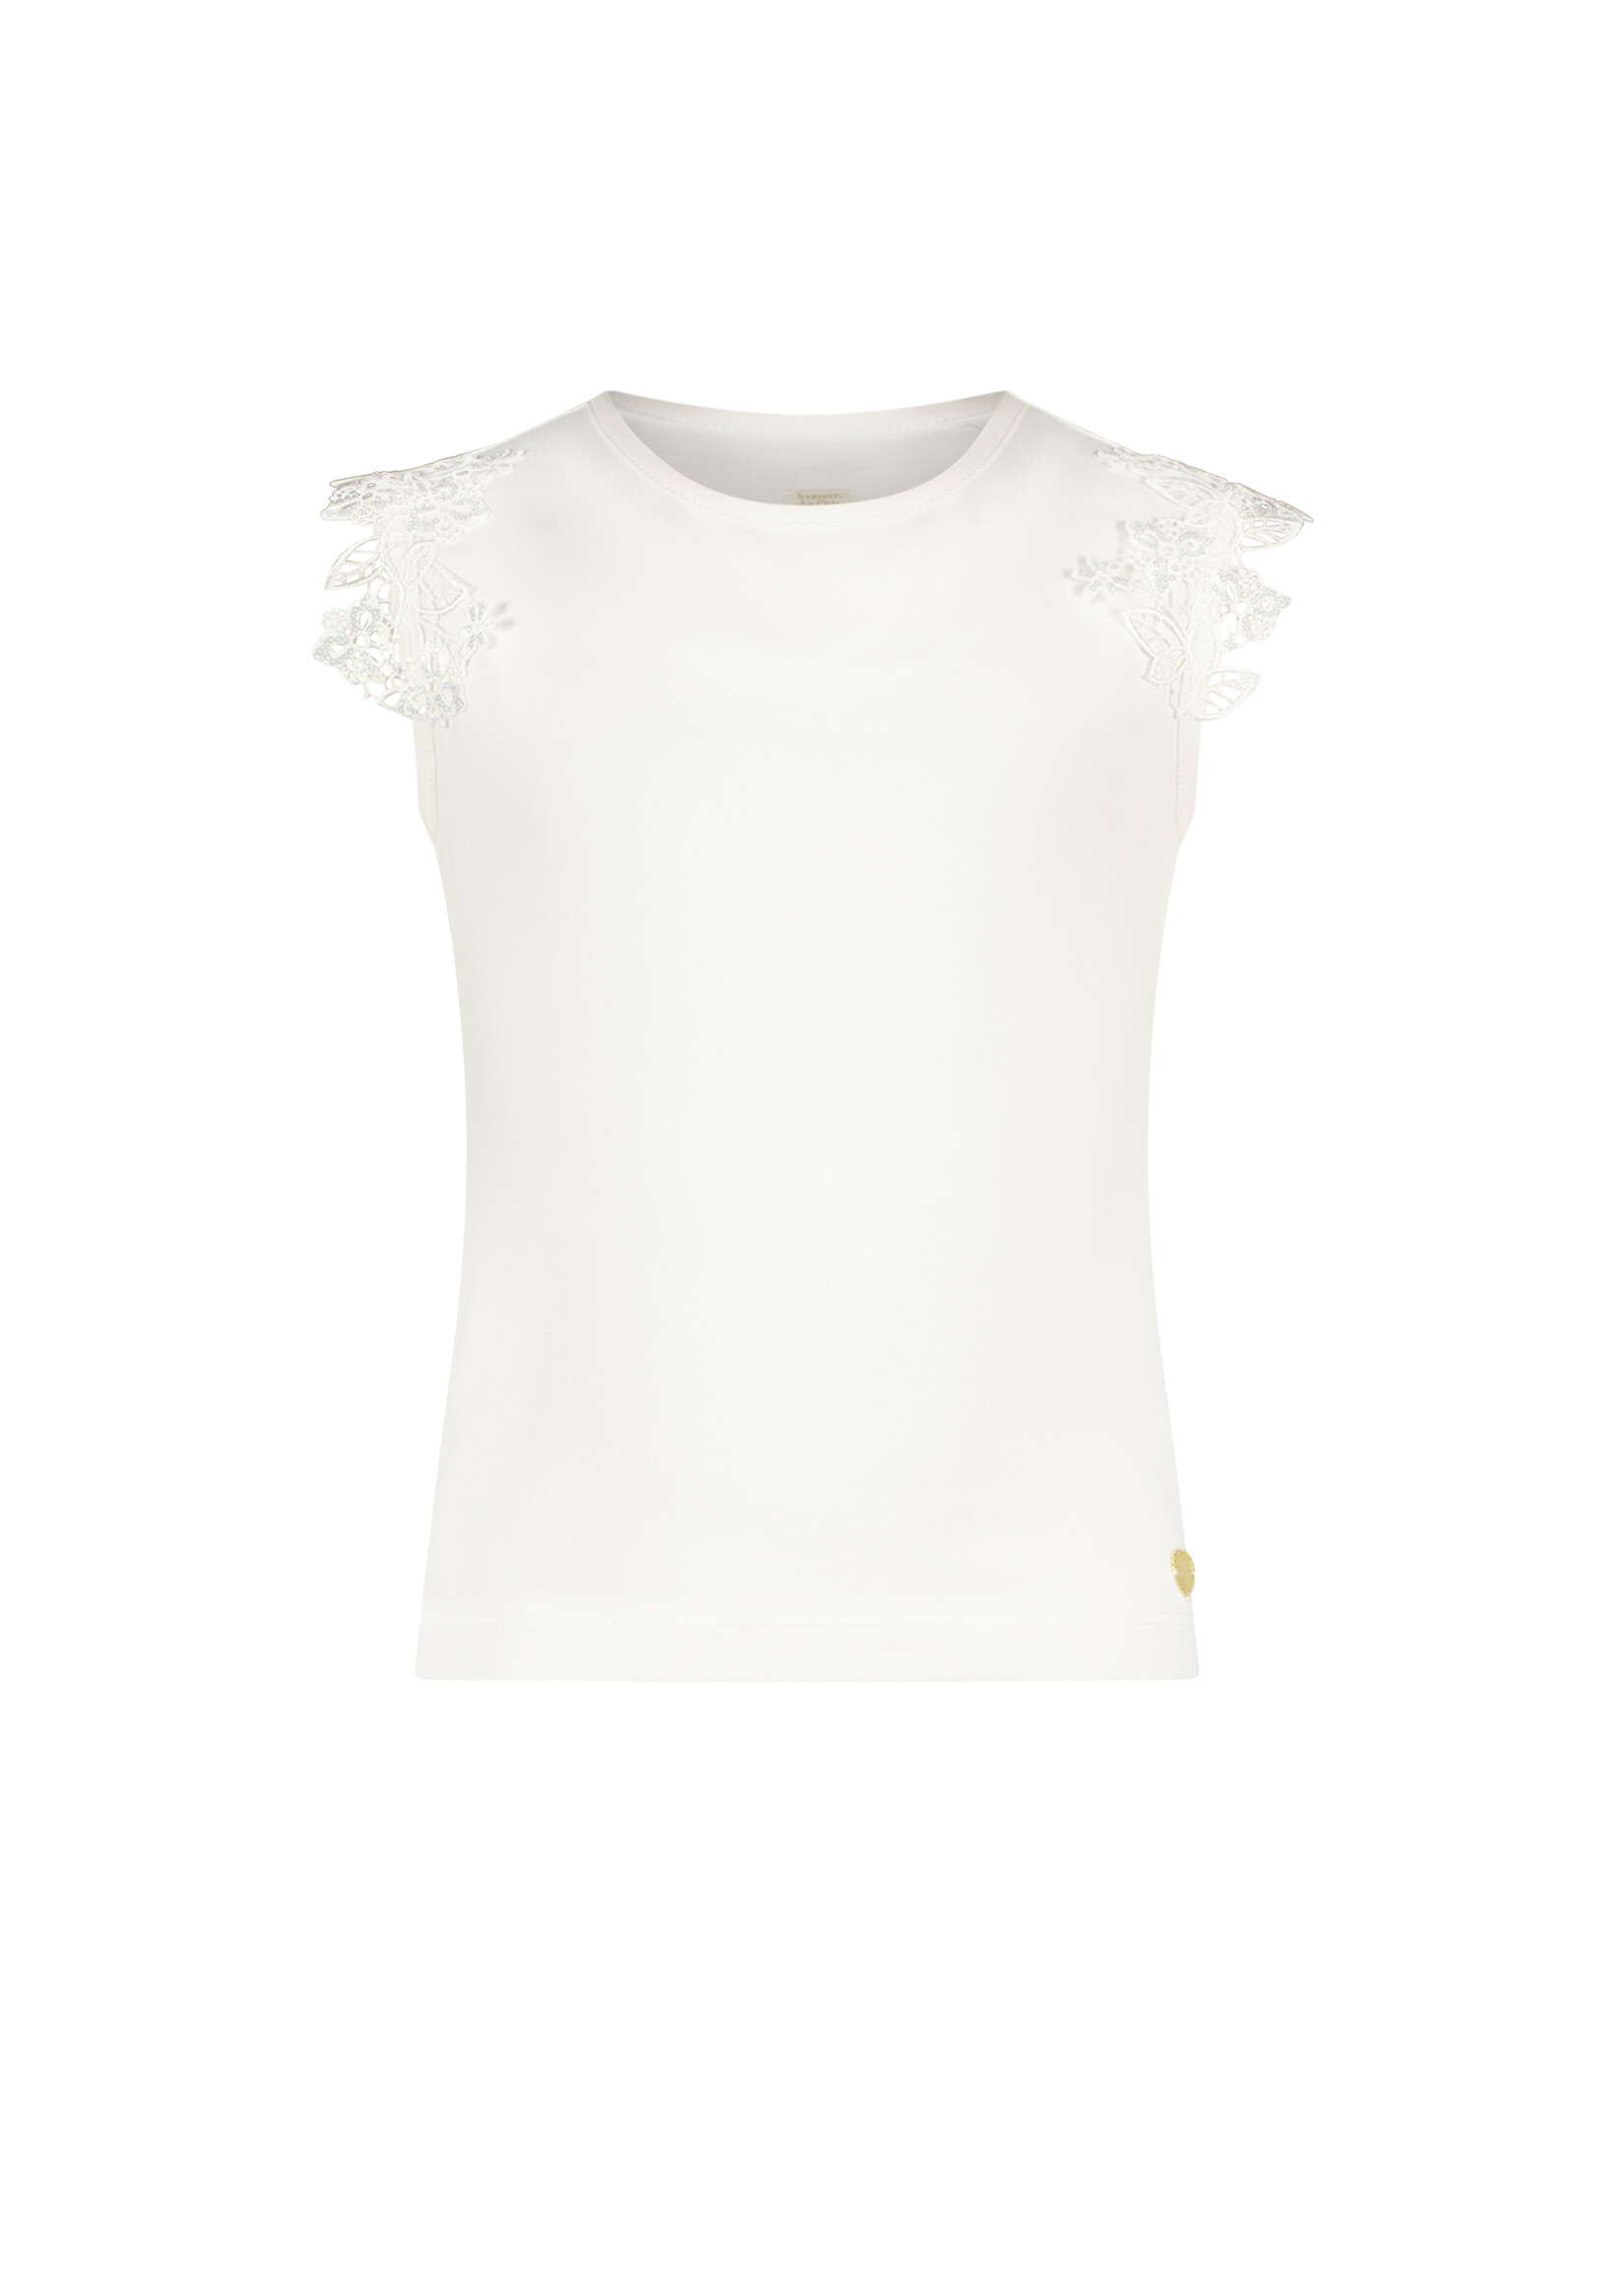 Le Chic Girls Kids C312-5405 NOOSHY flower applique T-shirt Off White